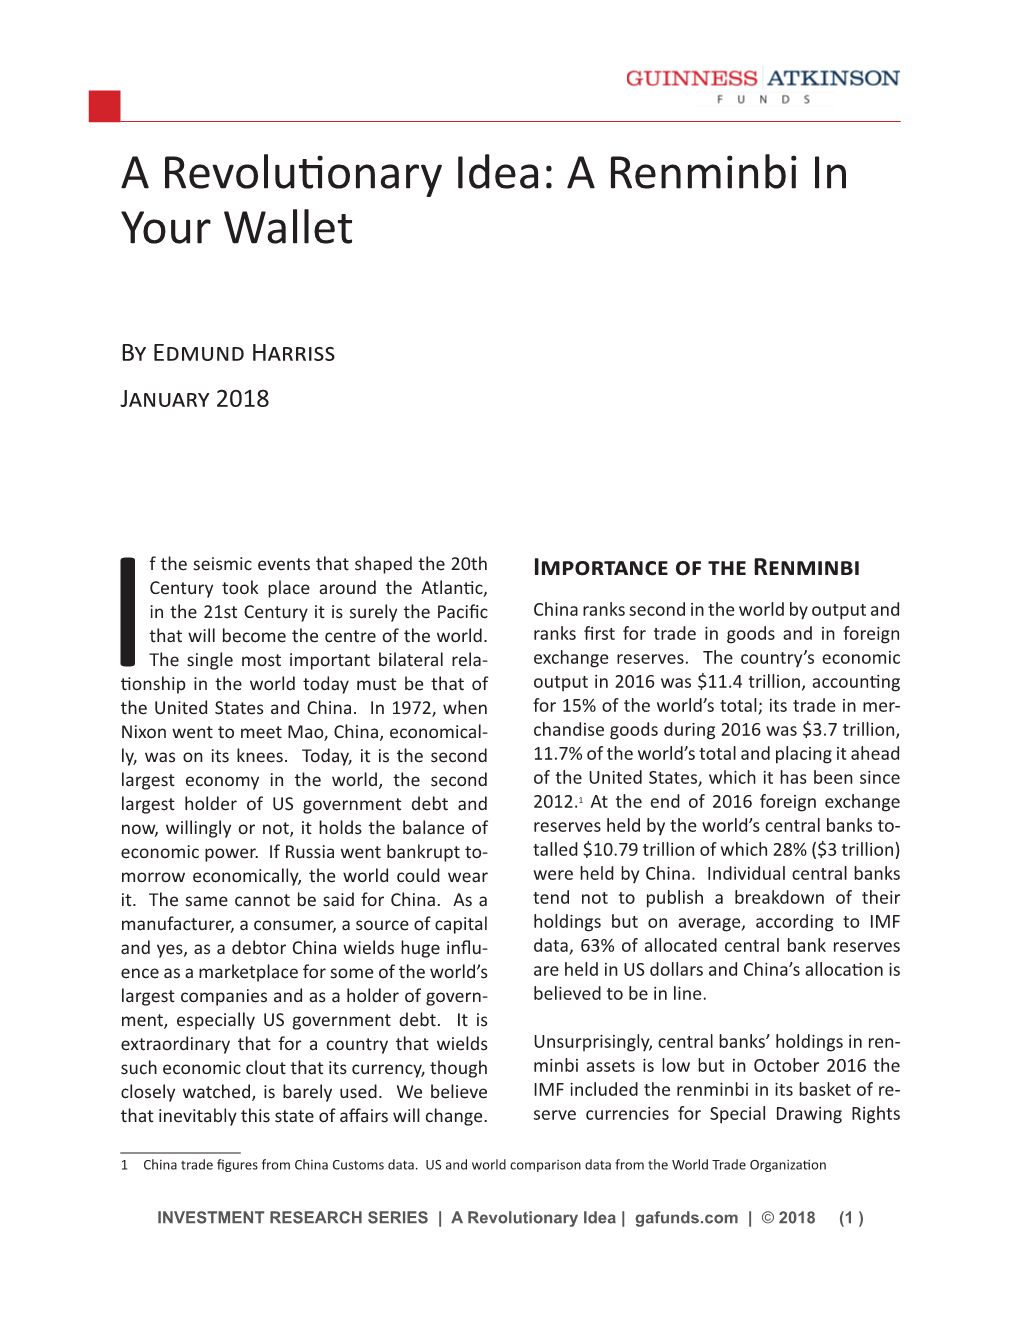 A Revolutionary Idea: a Renminbi in Your Wallet